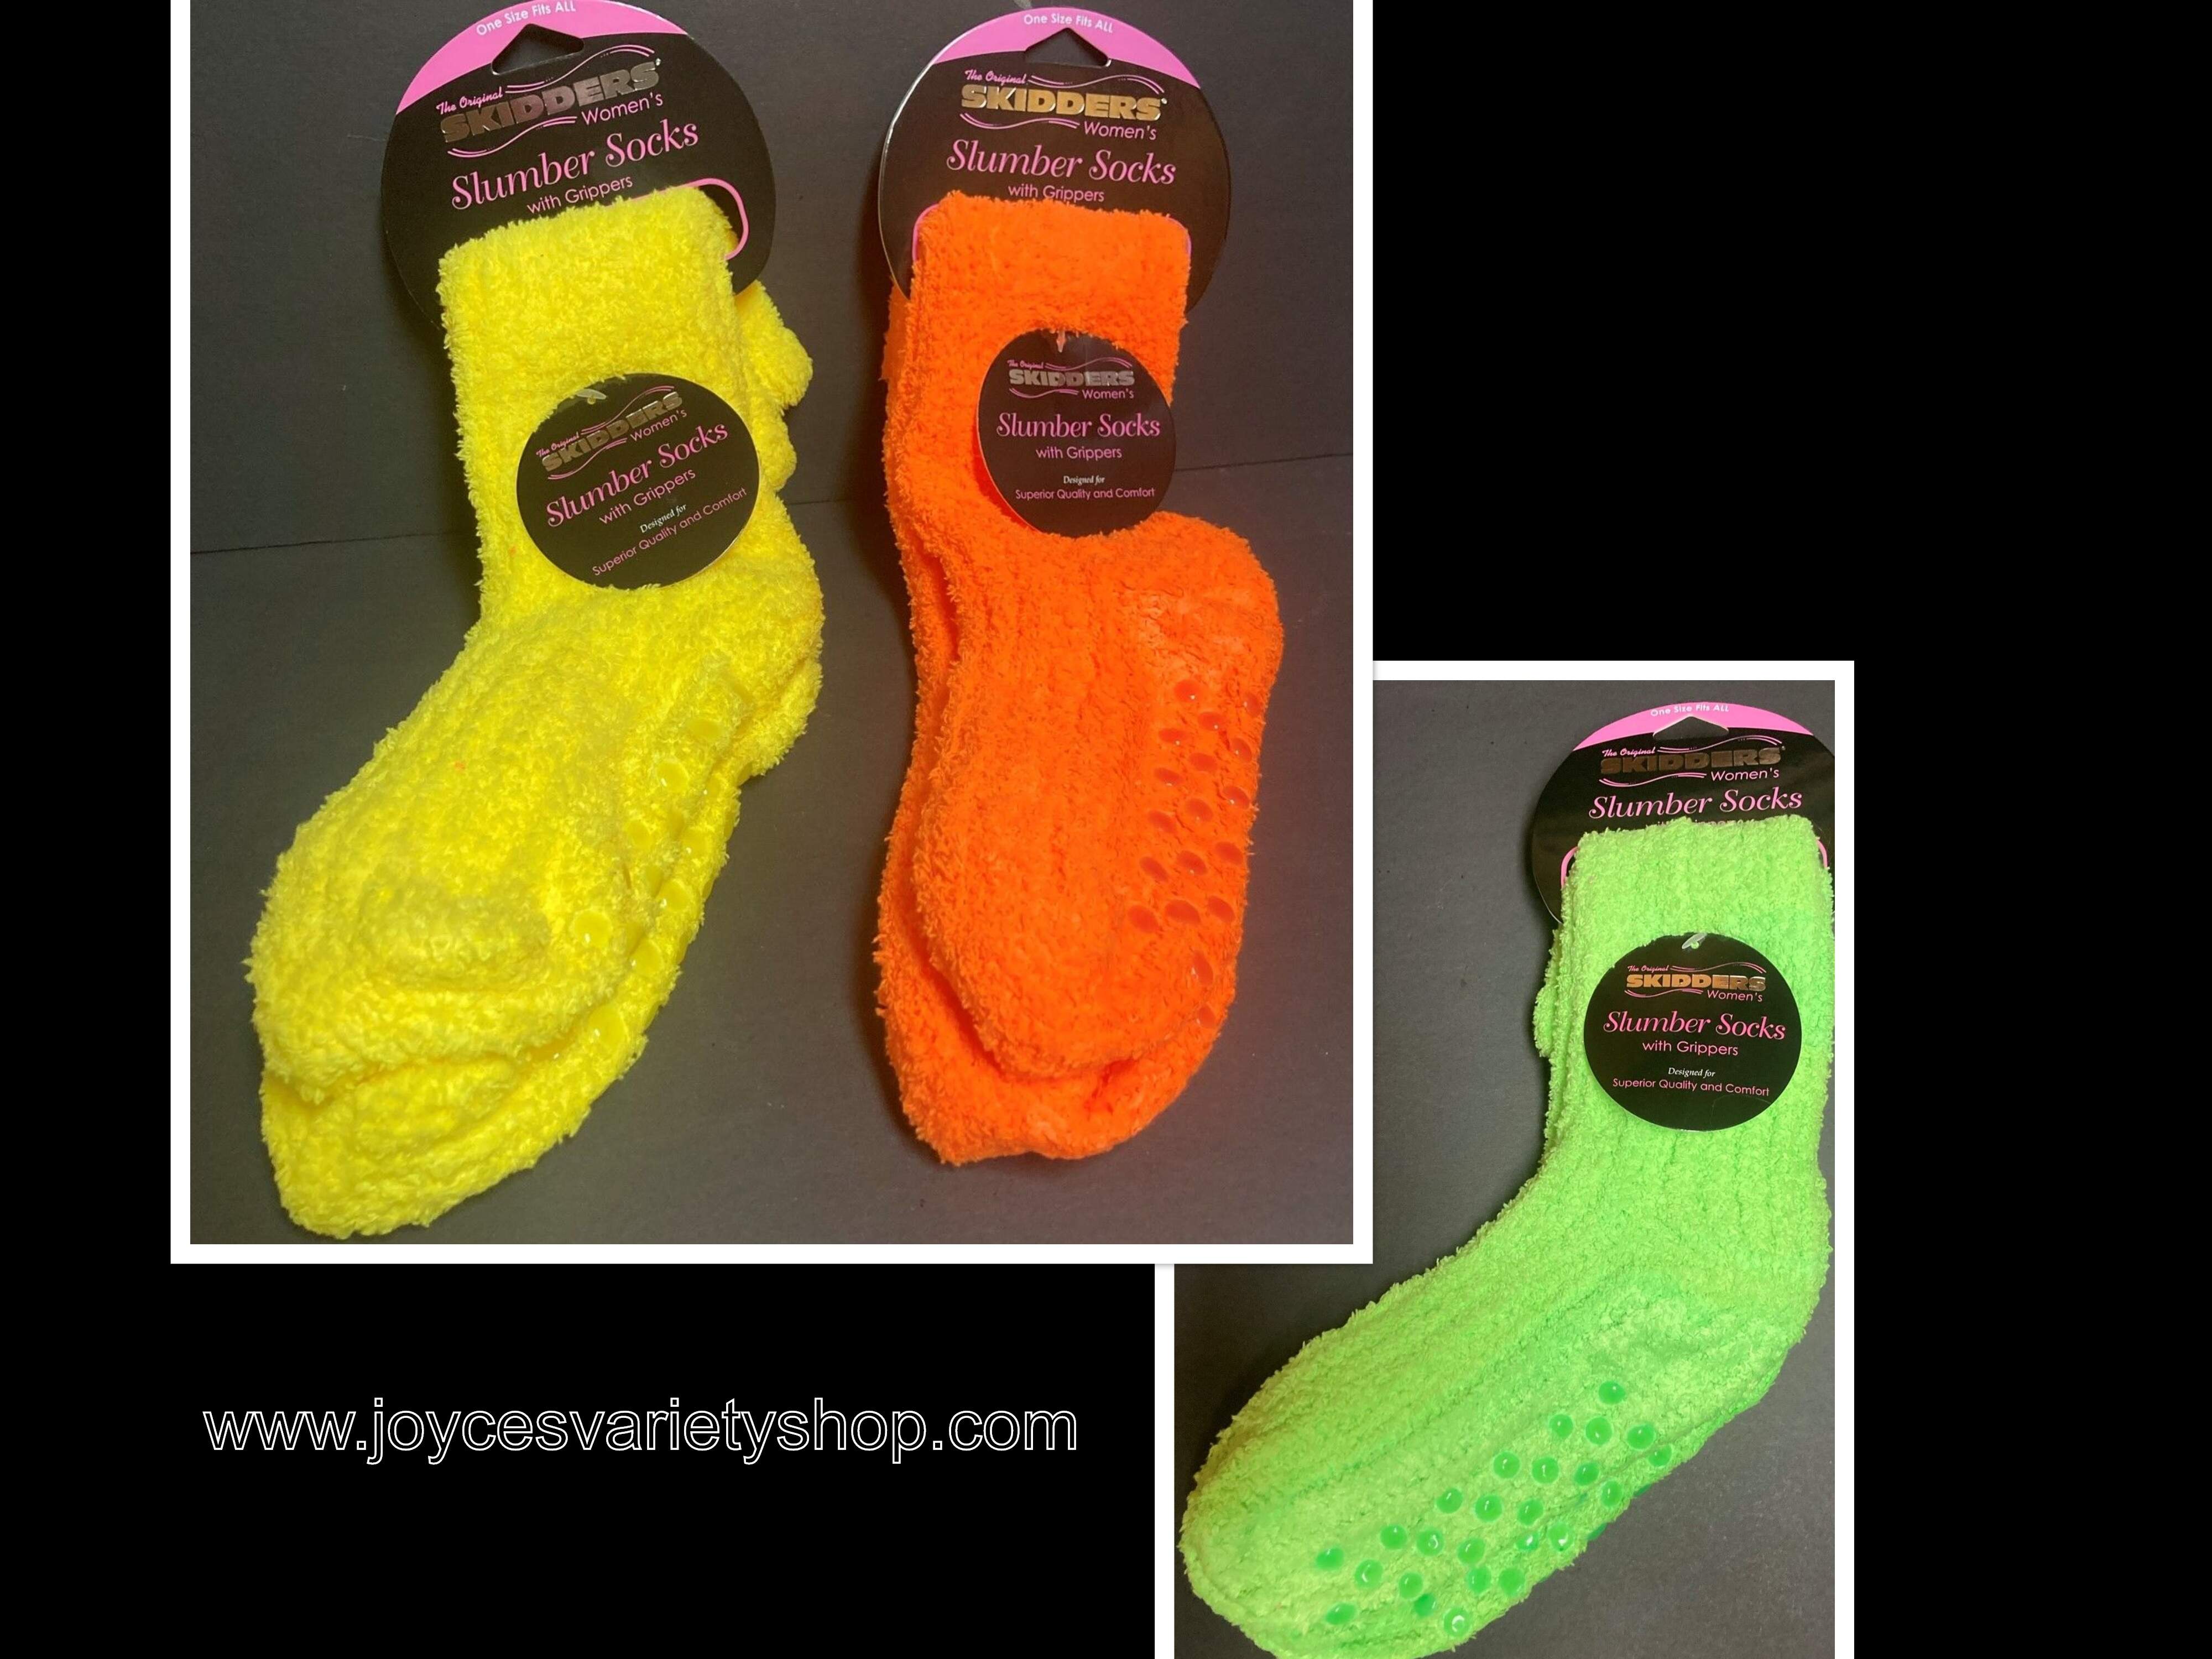 Skidders Neon Slumber Socks Women's One Size Various Colors